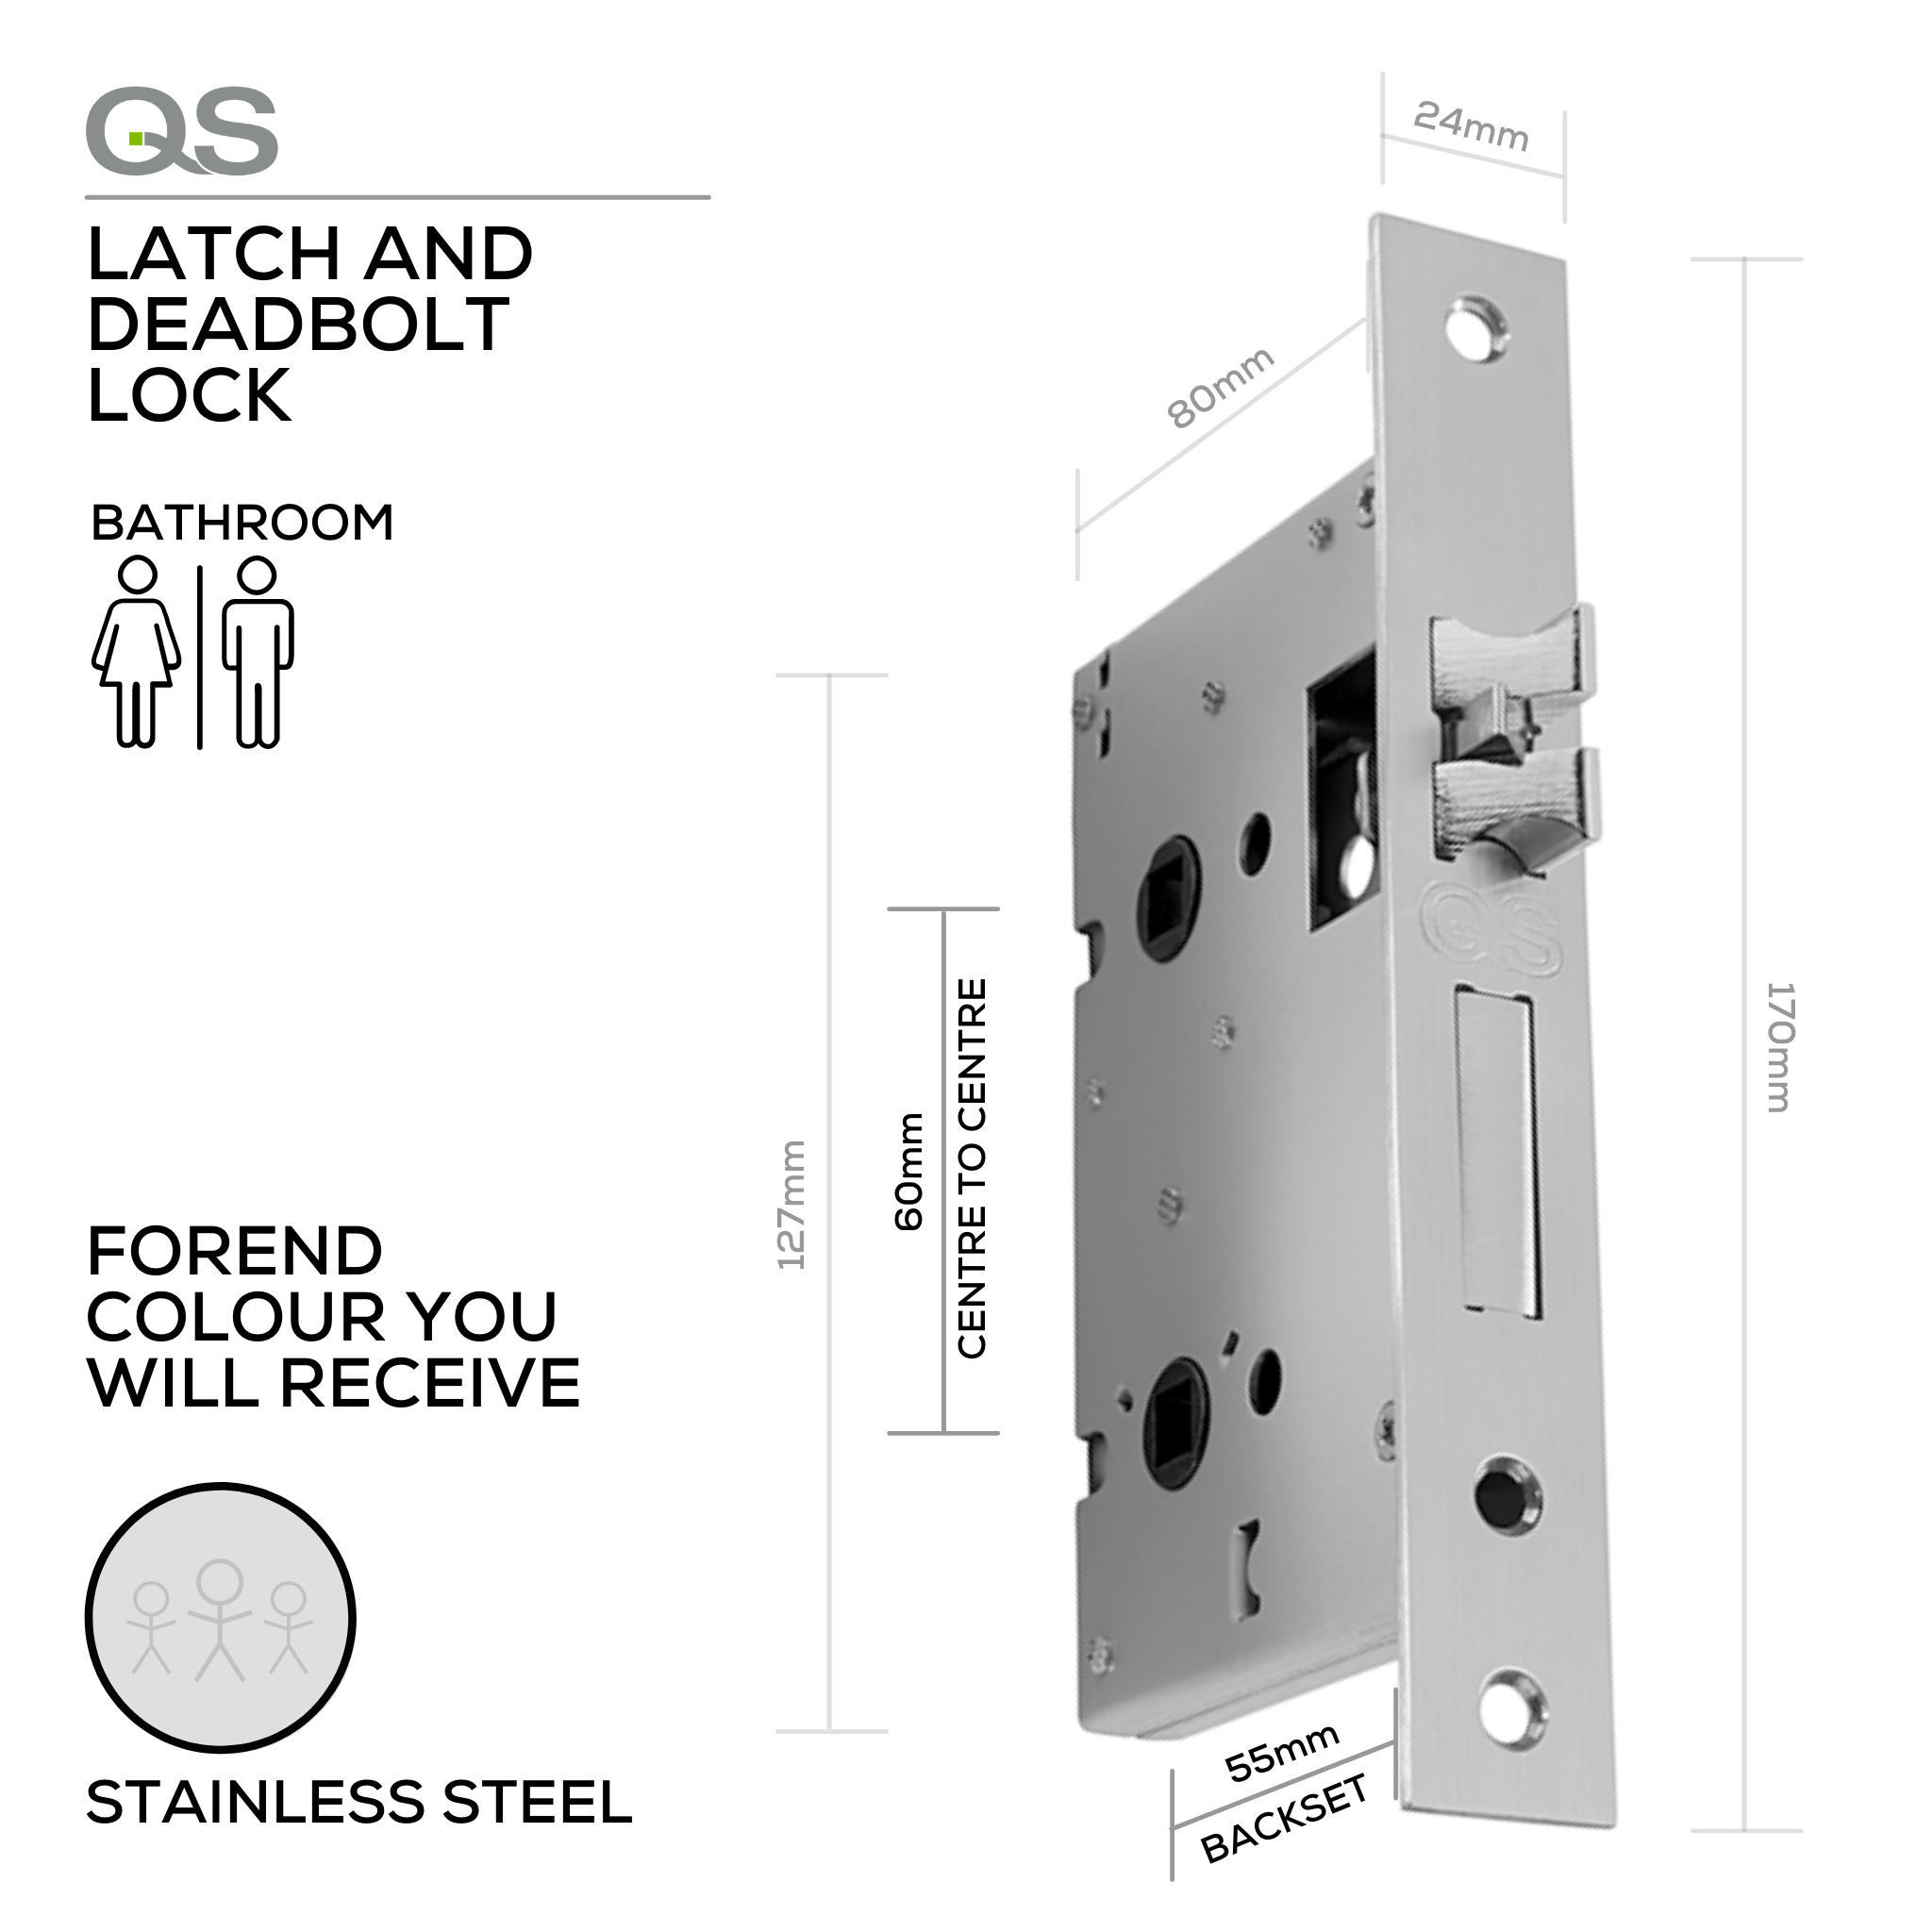 QS6055/5/SS, Bathroom, Latch Lock & Deadbolt Lock, WC Thumbturn Hardware, 55mm (Backset), 60mm (ctc), Stainless Steel, QS